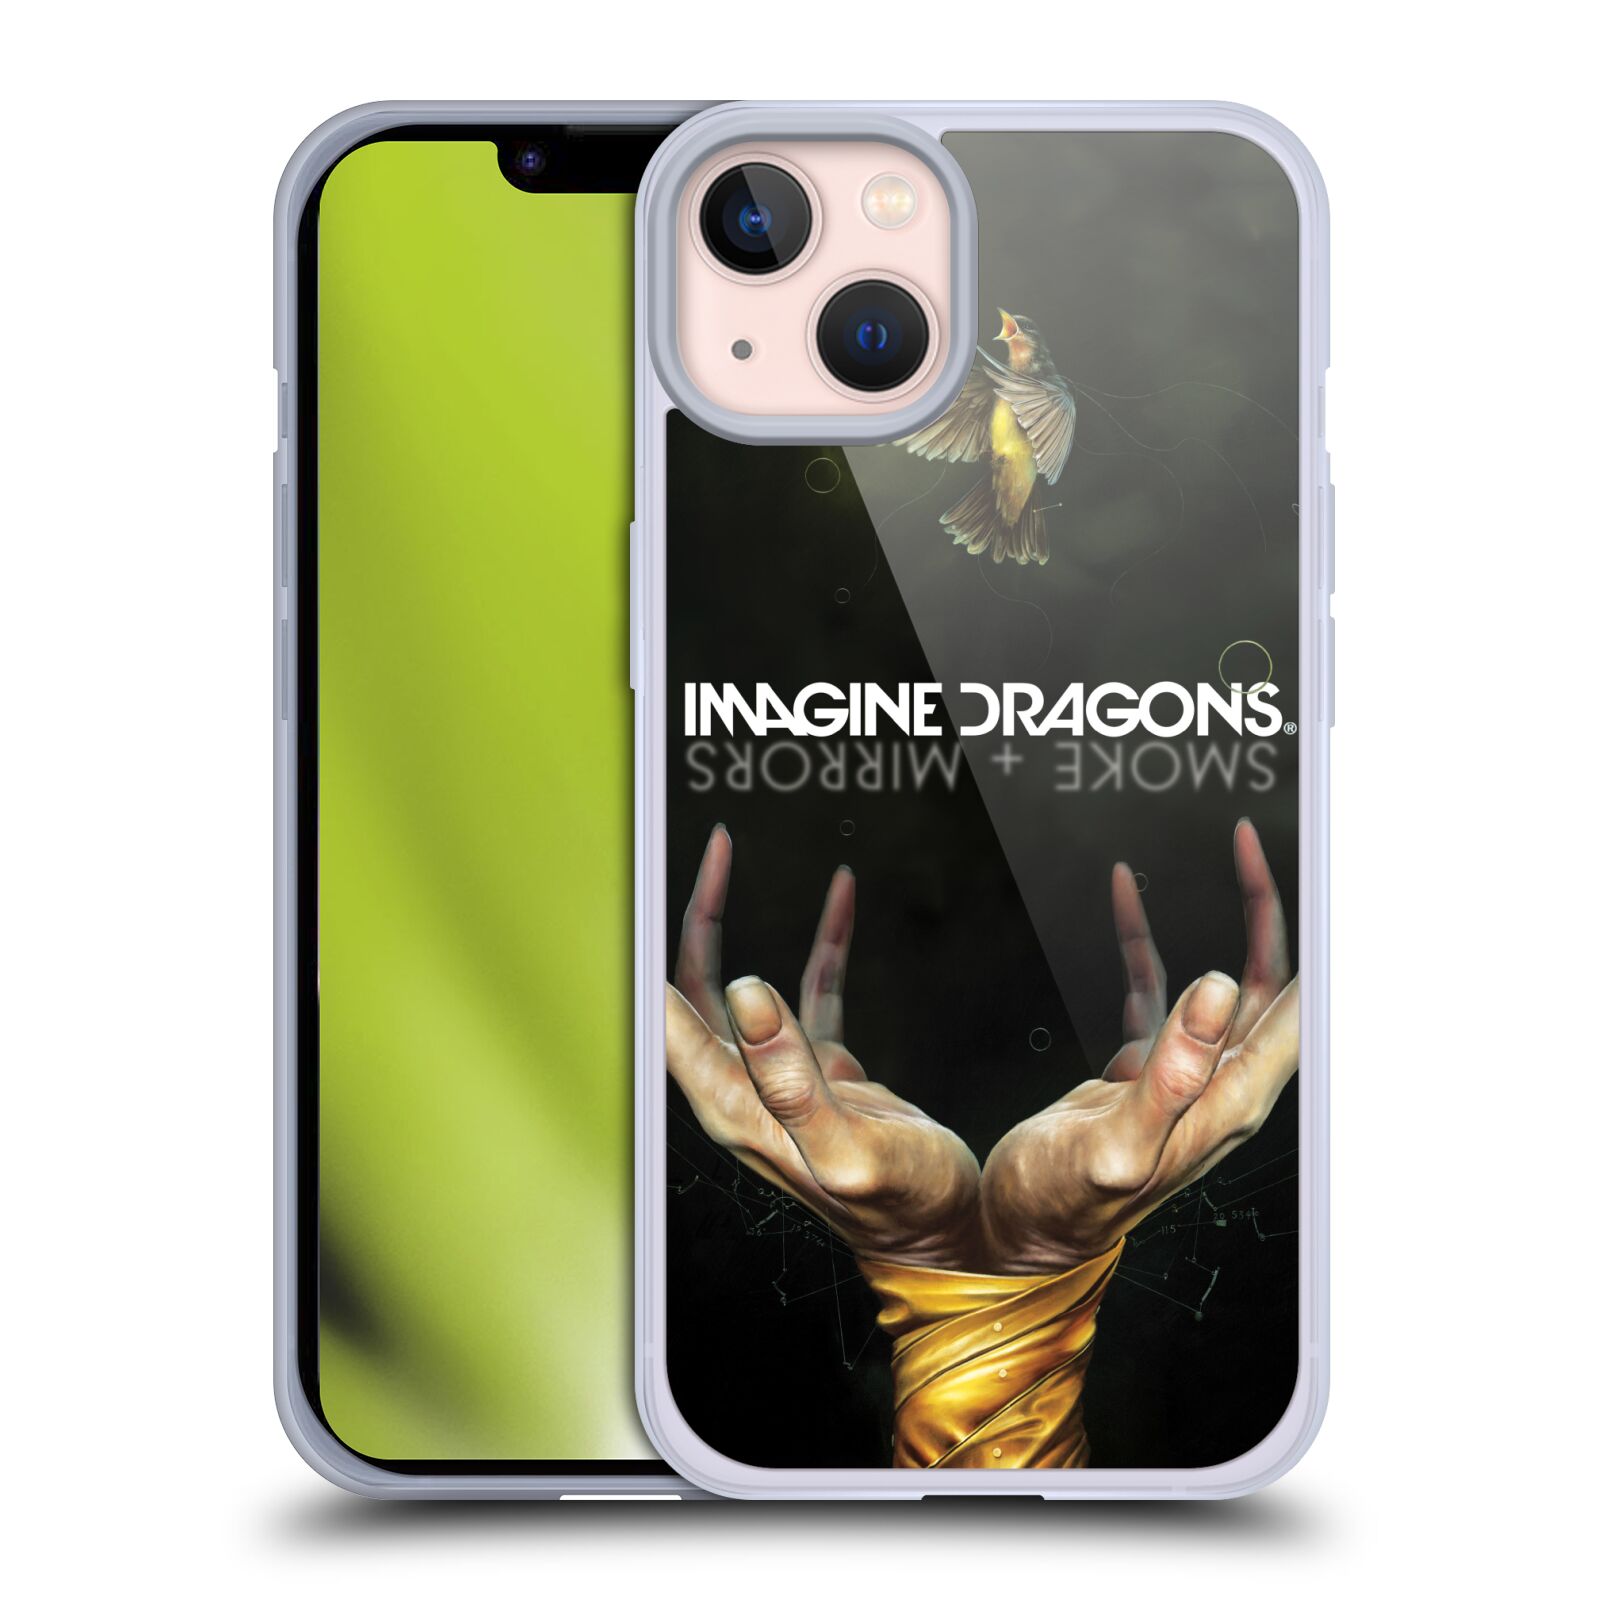 Silikonové pouzdro na mobil Apple iPhone 13 - Imagine Dragons - Smoke And Mirrors (Silikonový kryt, obal, pouzdro na mobilní telefon Apple iPhone 13 s licencovaným motivem Imagine Dragons - Smoke And Mirrors)